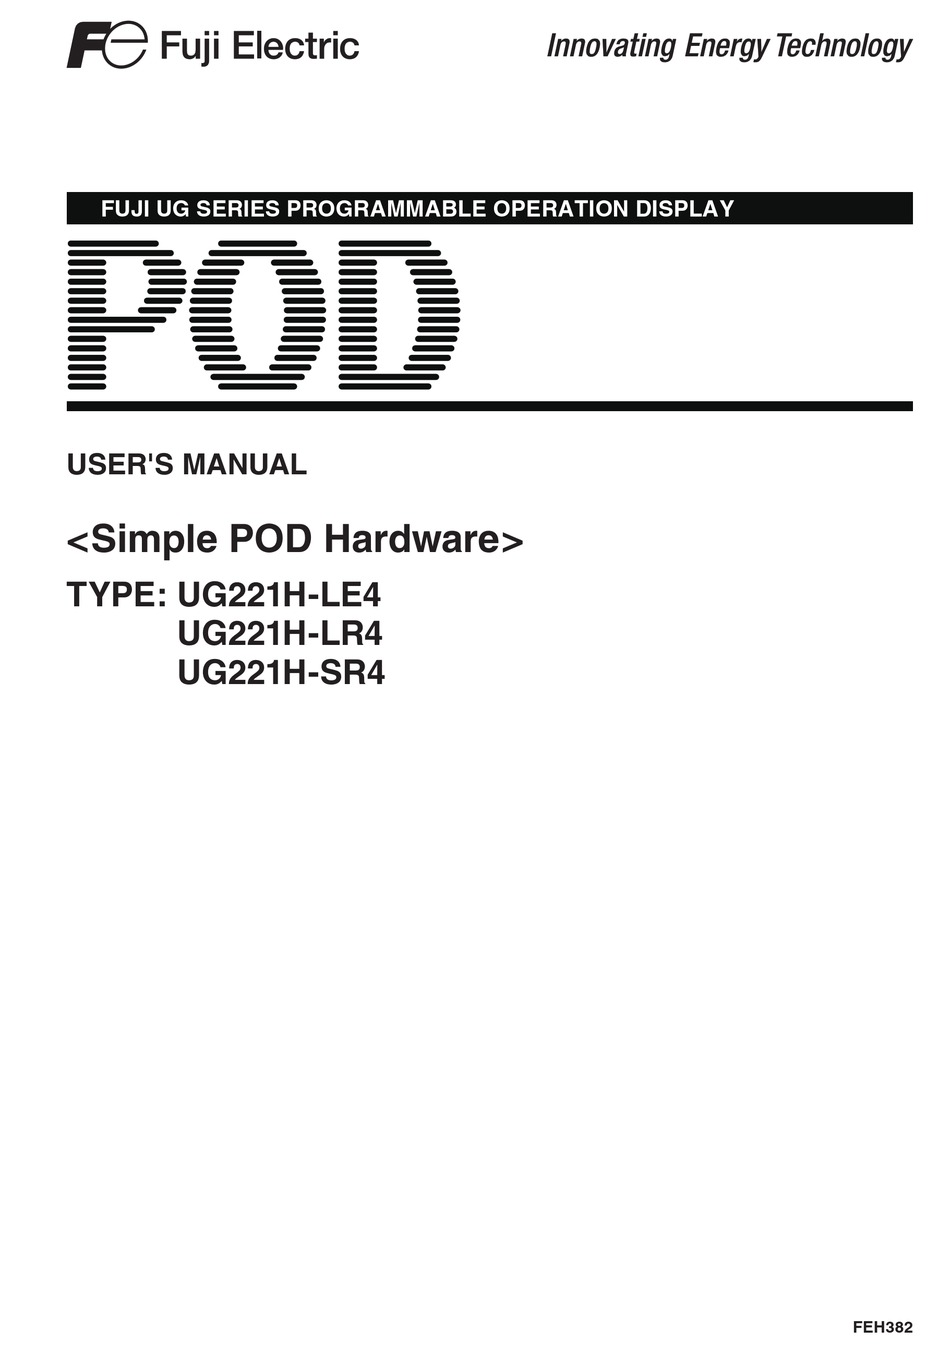 FUJI ELECTRIC POD UG221H-LE4 USER MANUAL Pdf Download | ManualsLib